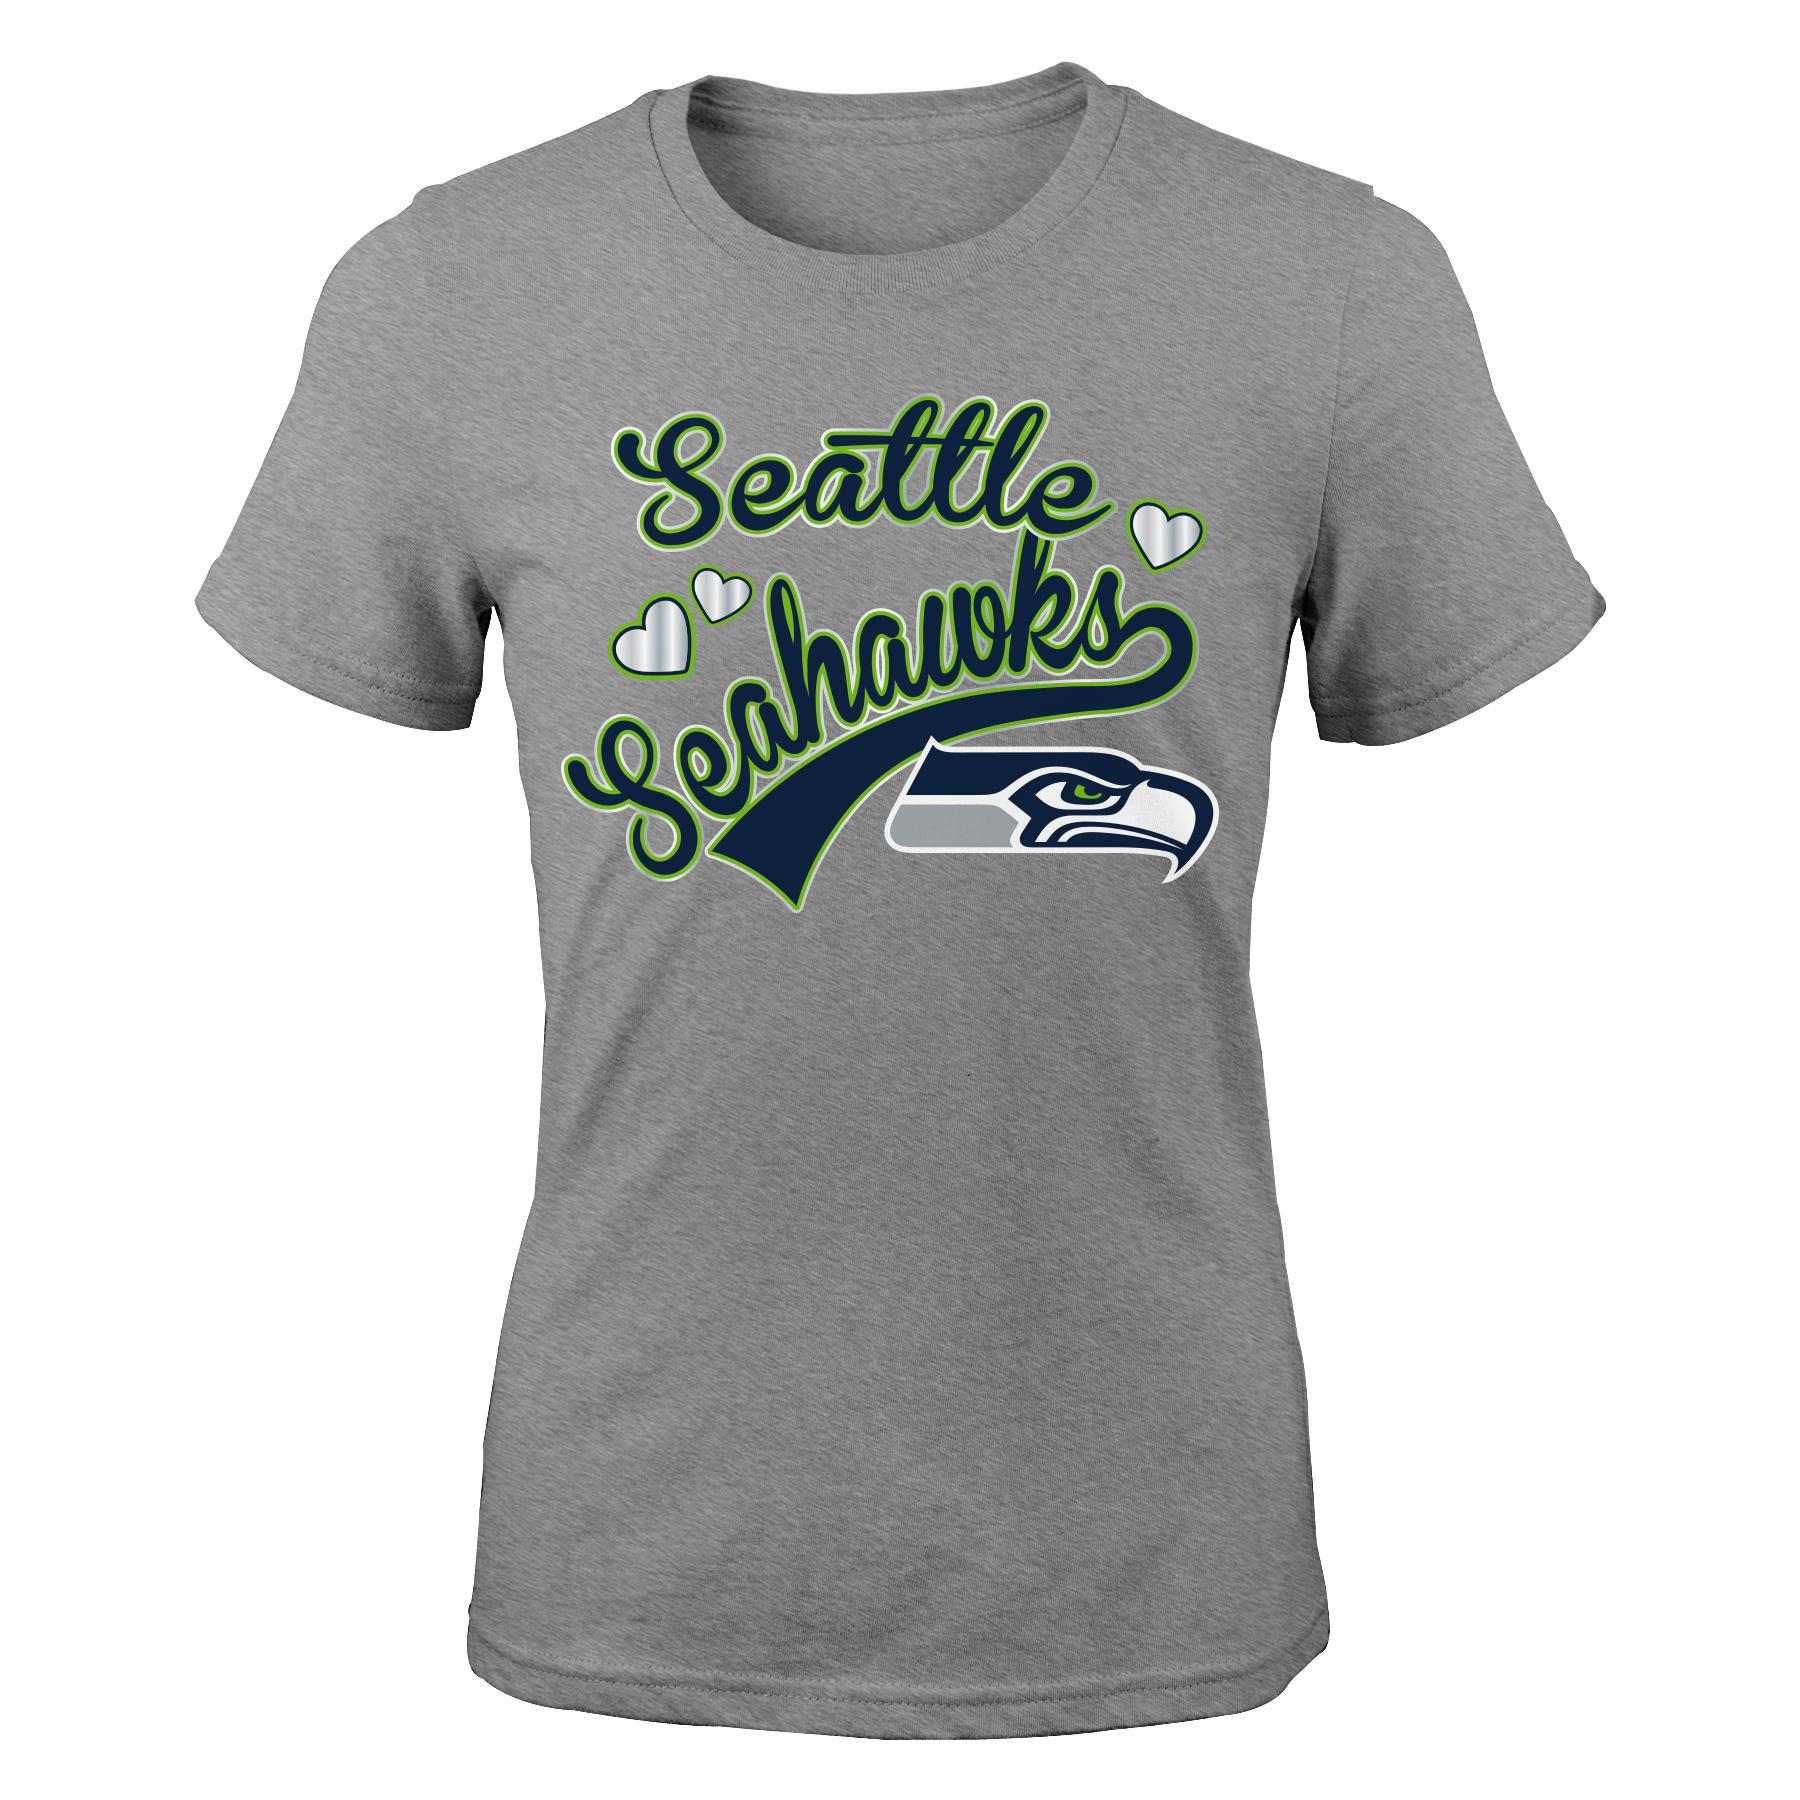 NFL Girls' T-Shirt - Seattle Seahawks